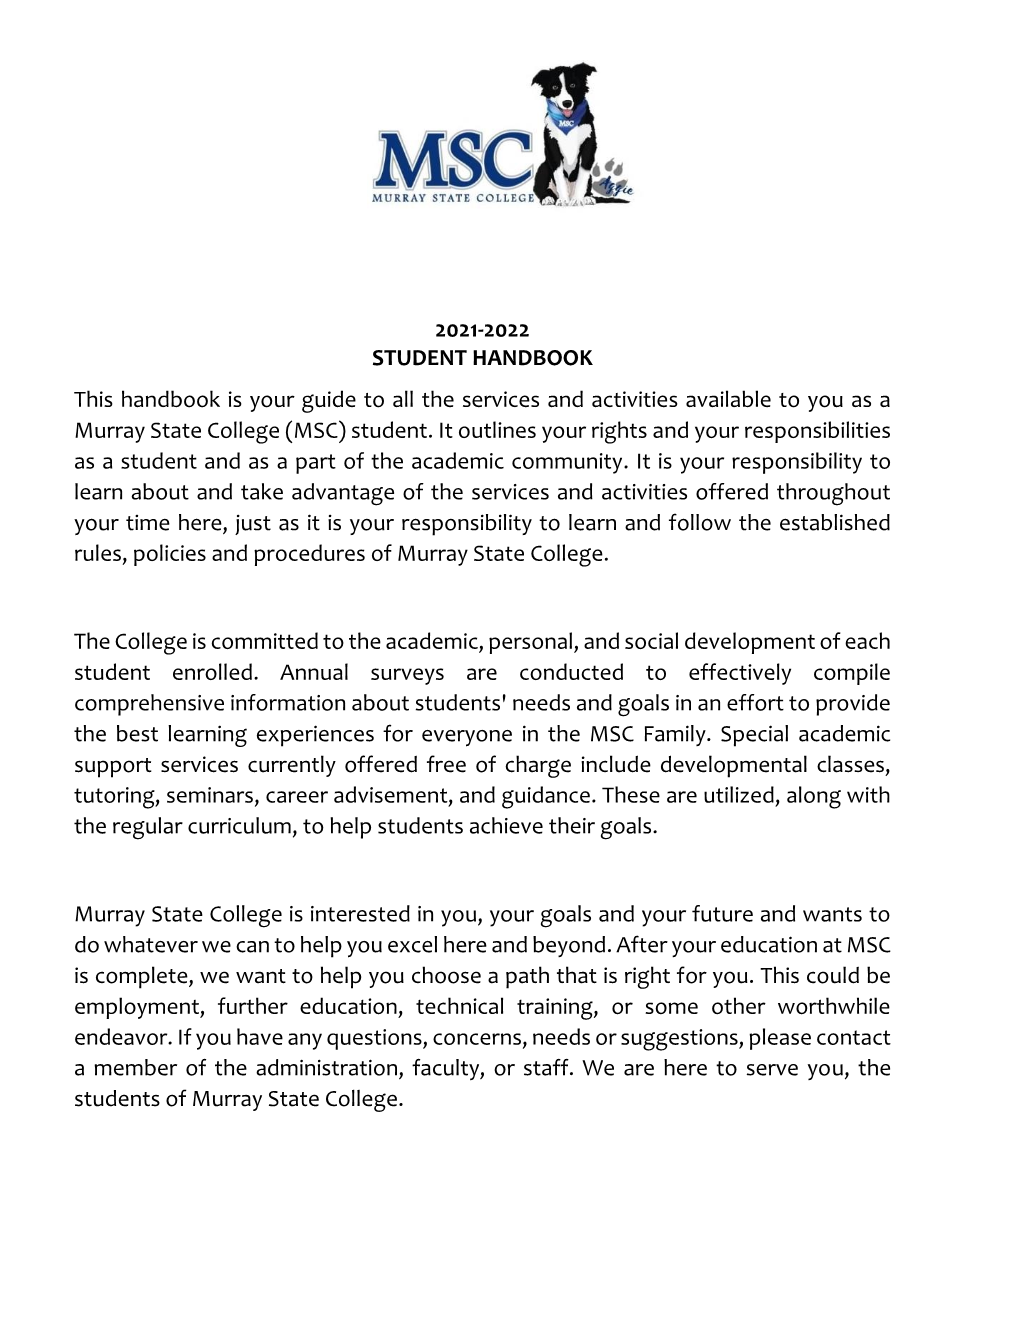 2021-2022 MSC Student Handbook